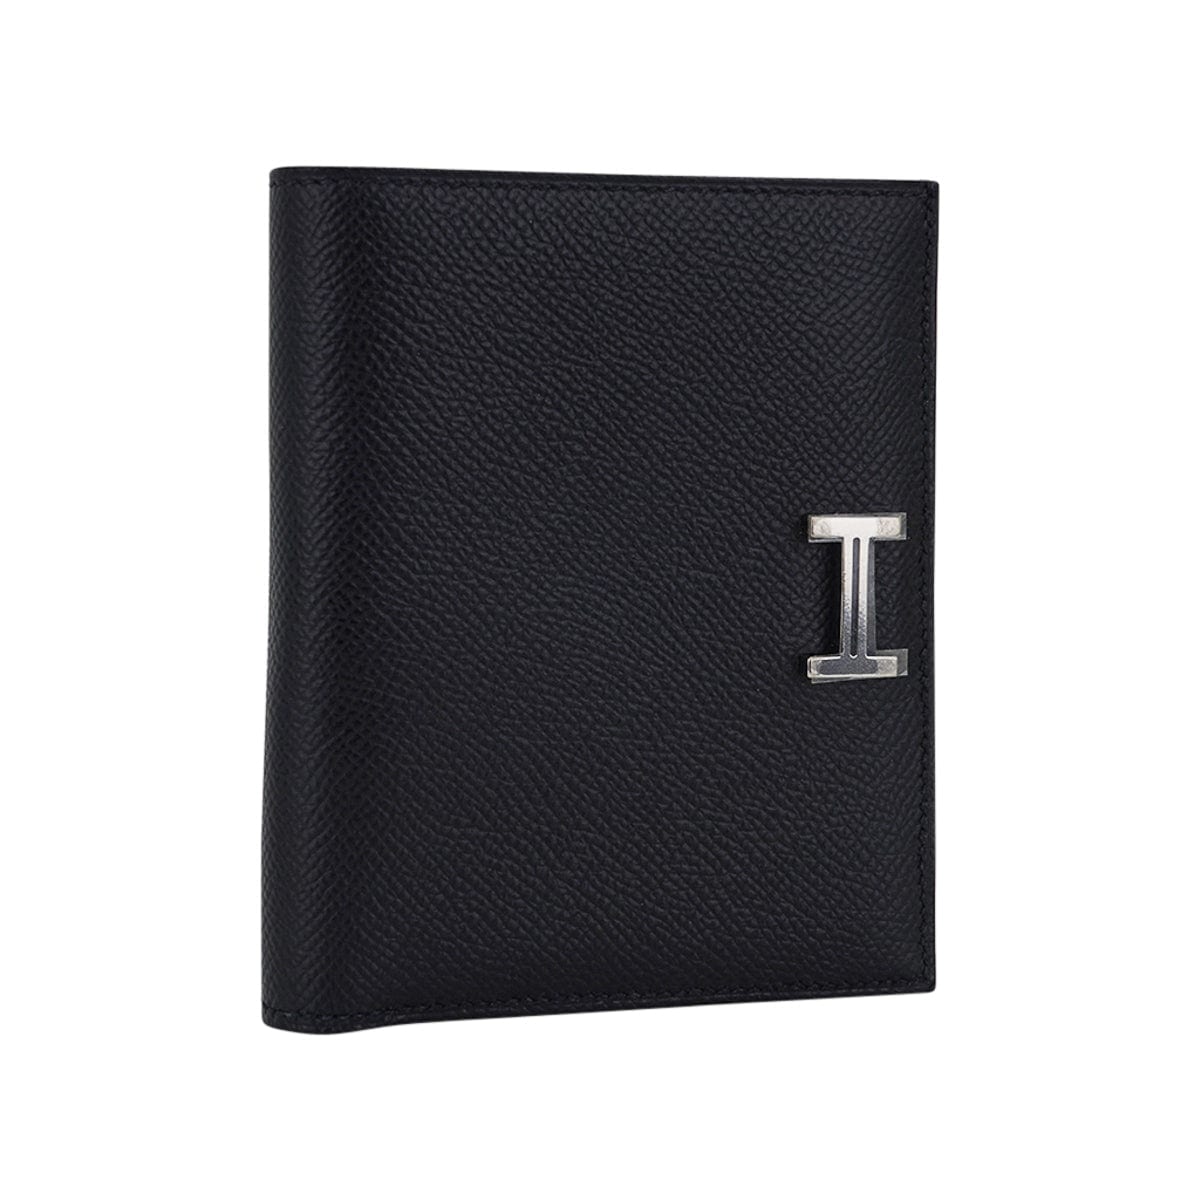 Hermes Bearn Compact in Black  Leather, Black hardware, Wallet